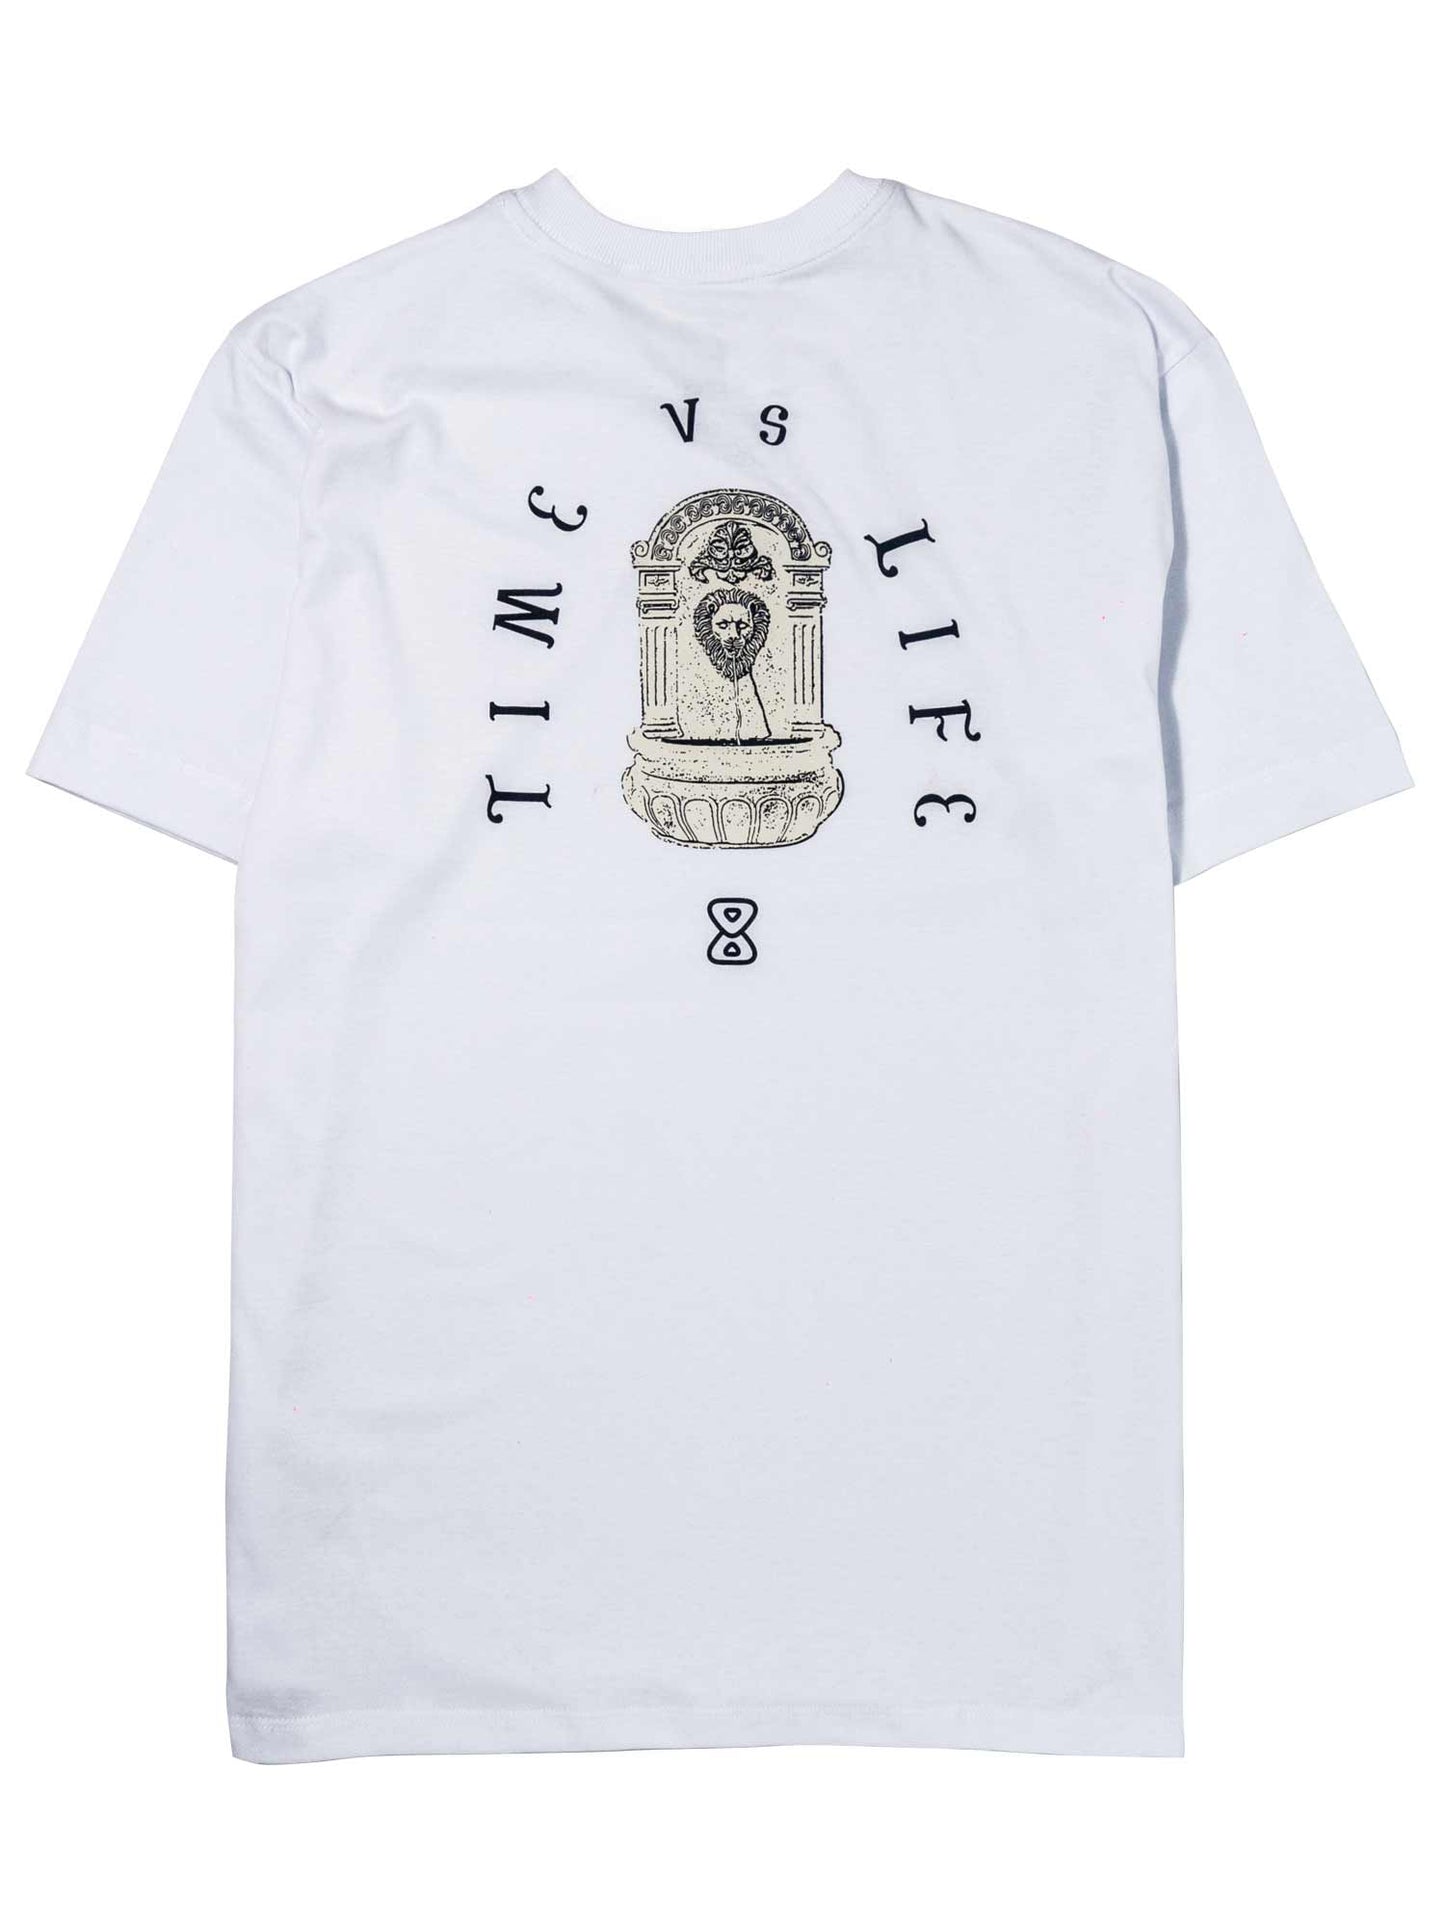     Camiseta-Future-Time-Vs-Life-Branca-Costas